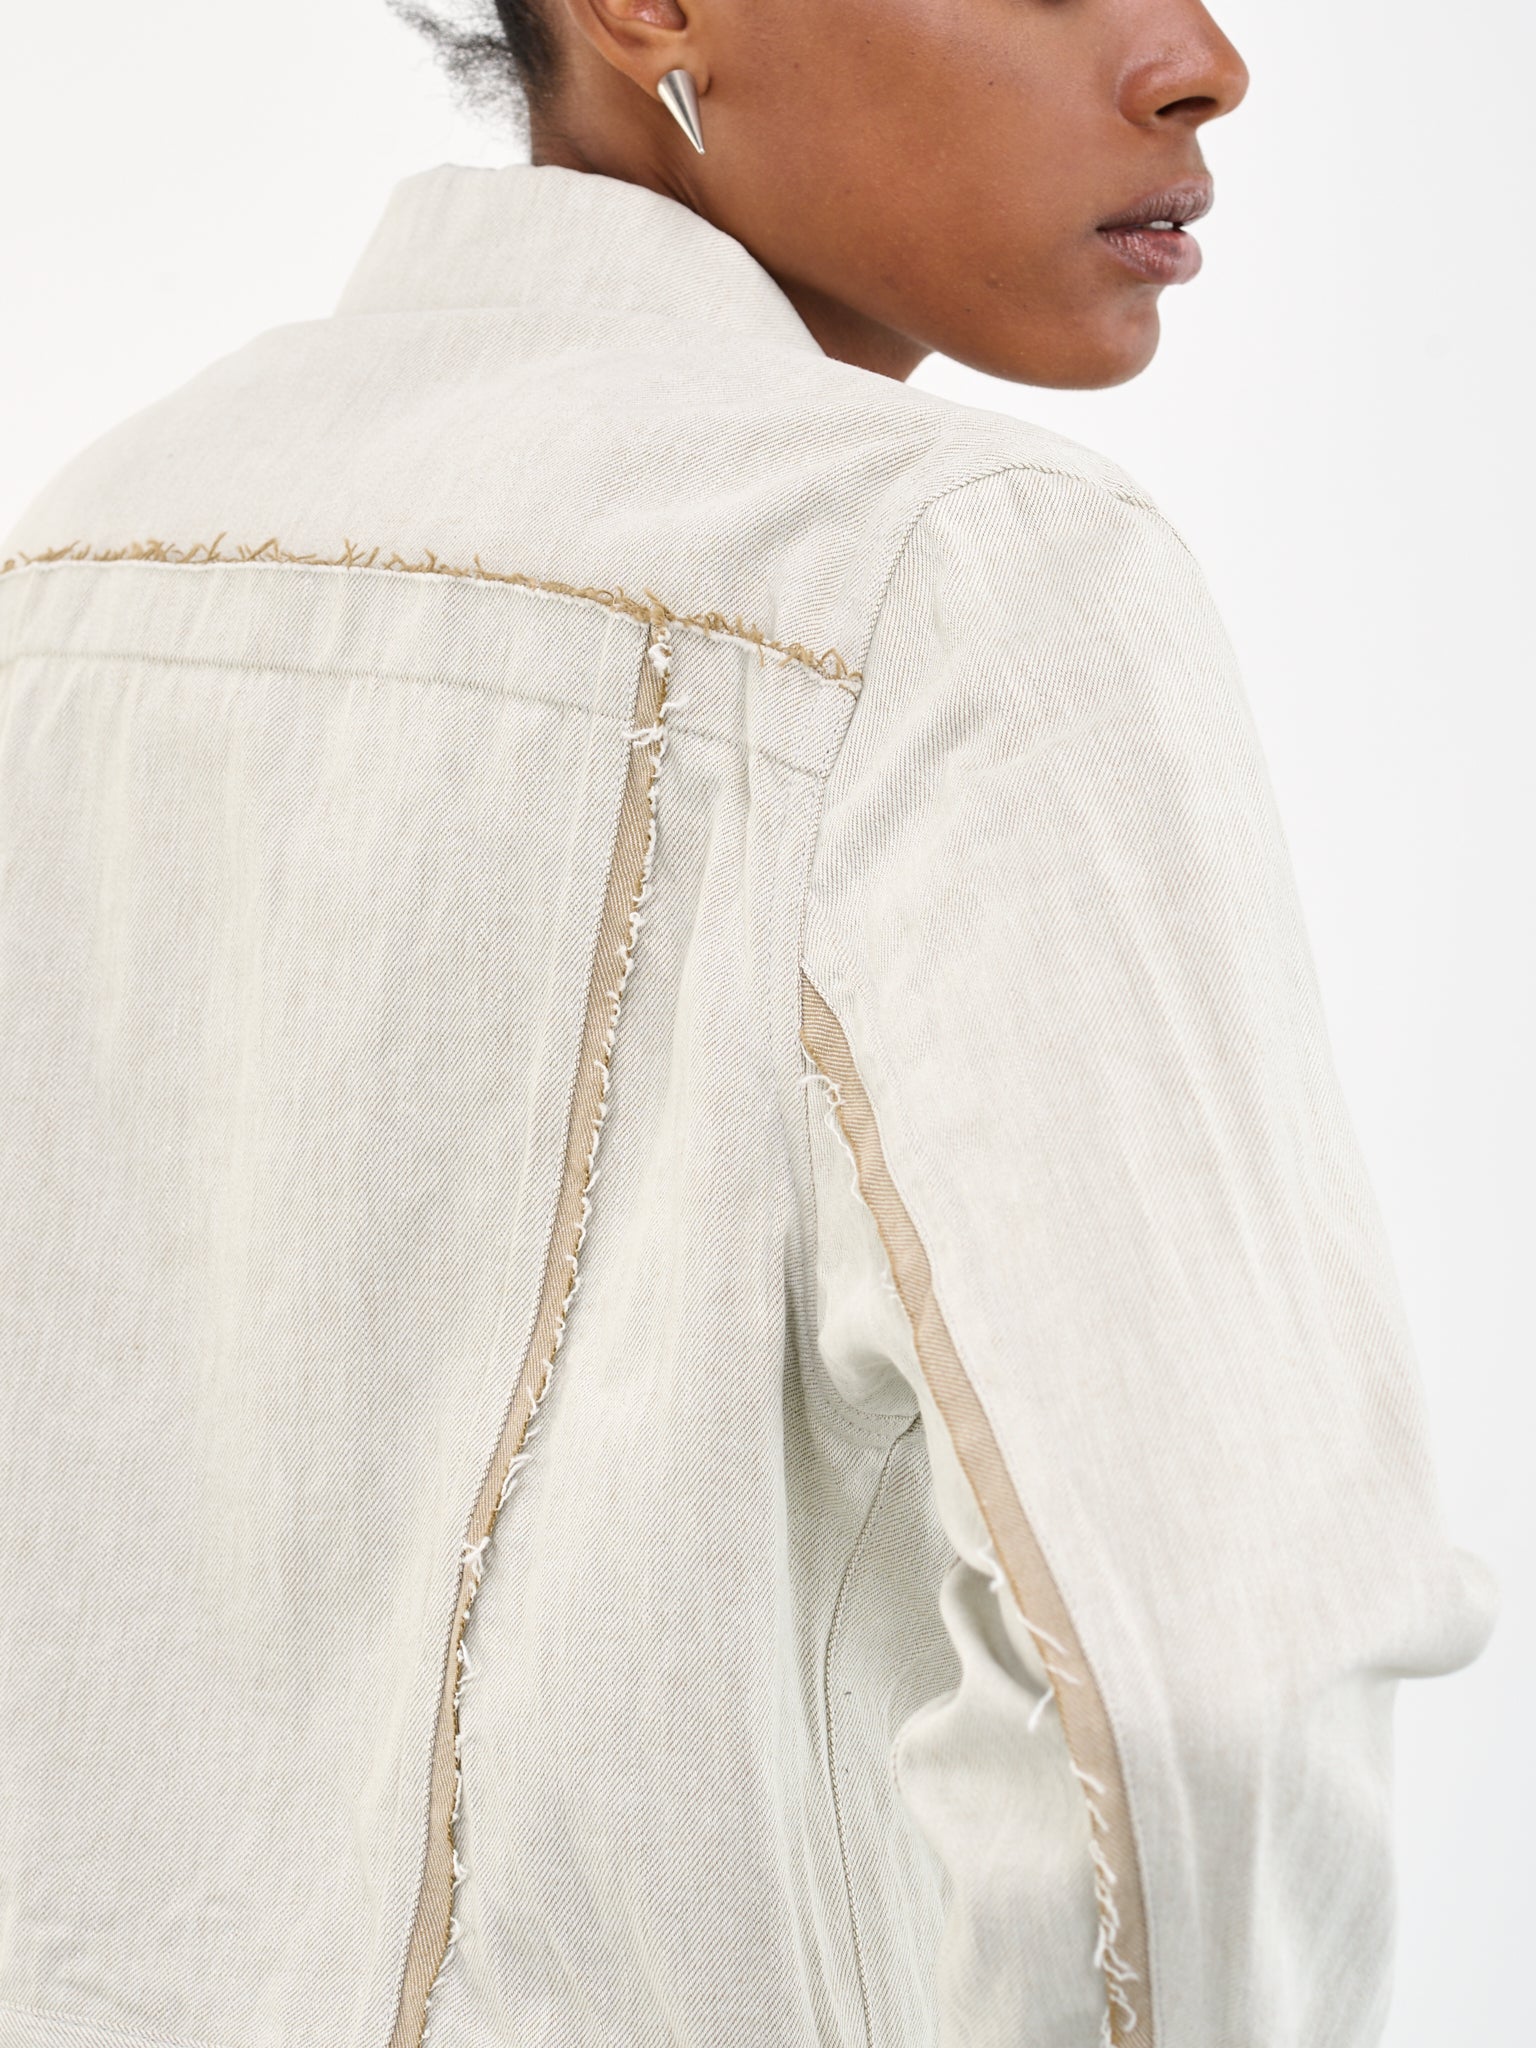 Shirt Jacket (YU-Y01-028-1-OFF-WHITE)